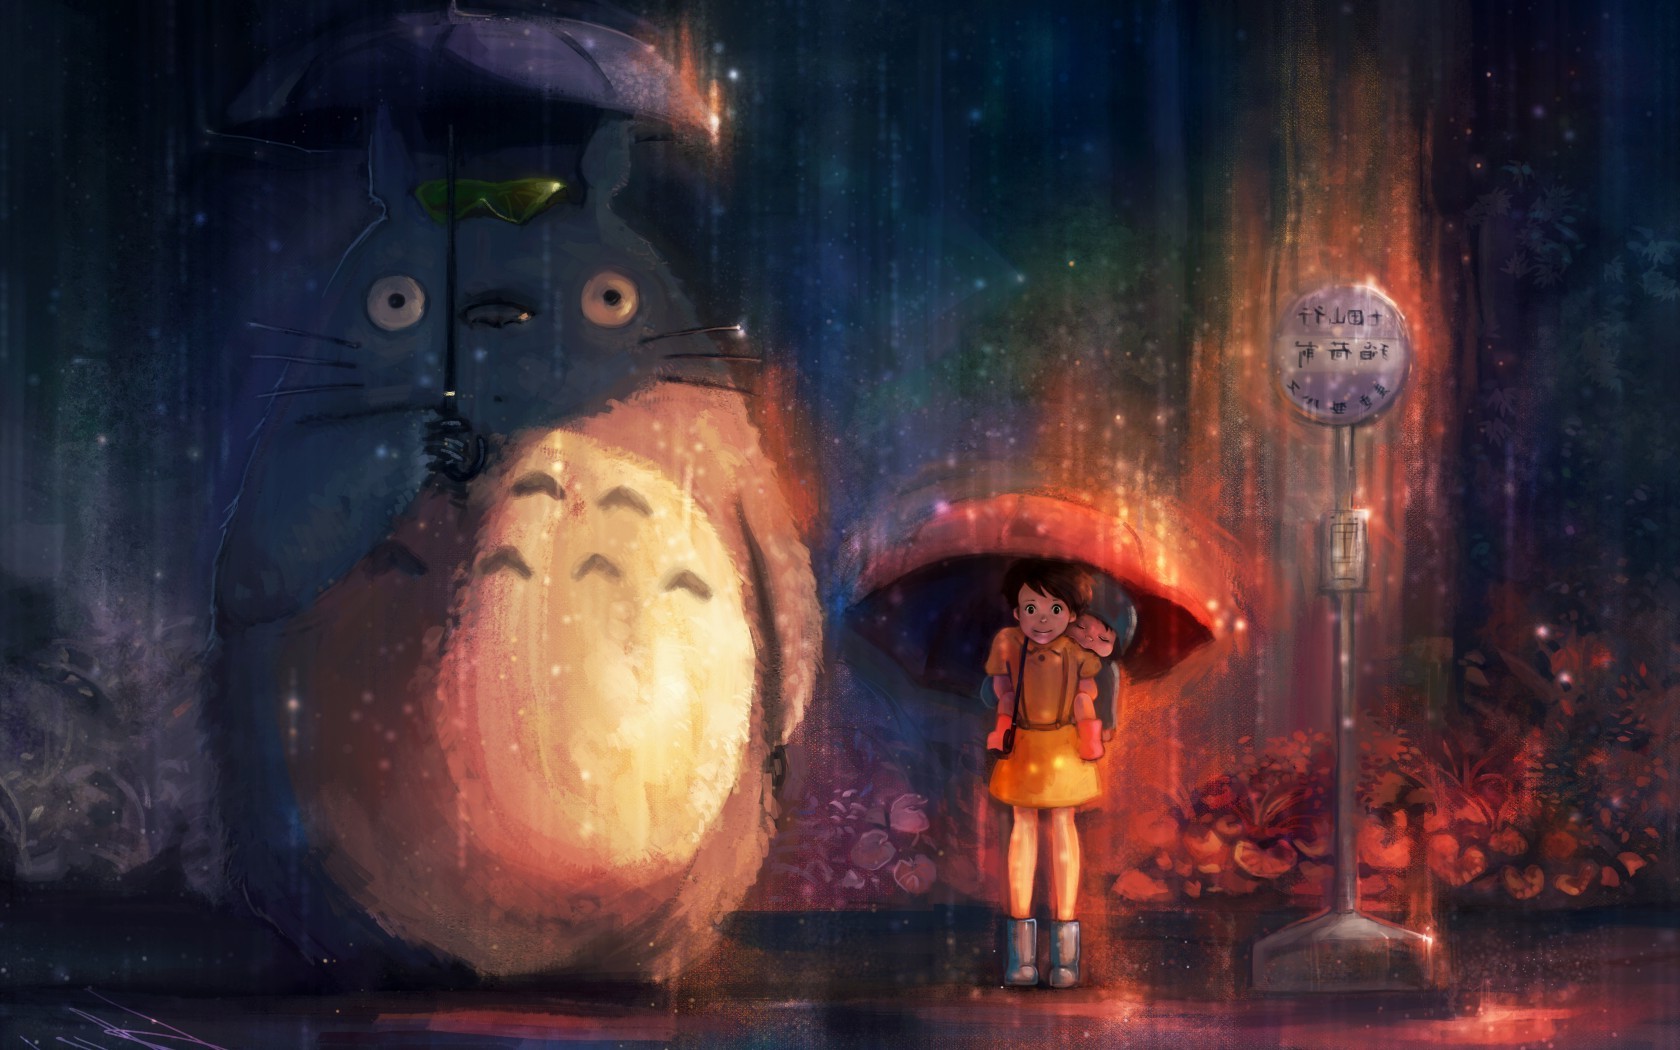 Studio Ghibli Anime Totoro Wallpapers Hd Desktop Studio